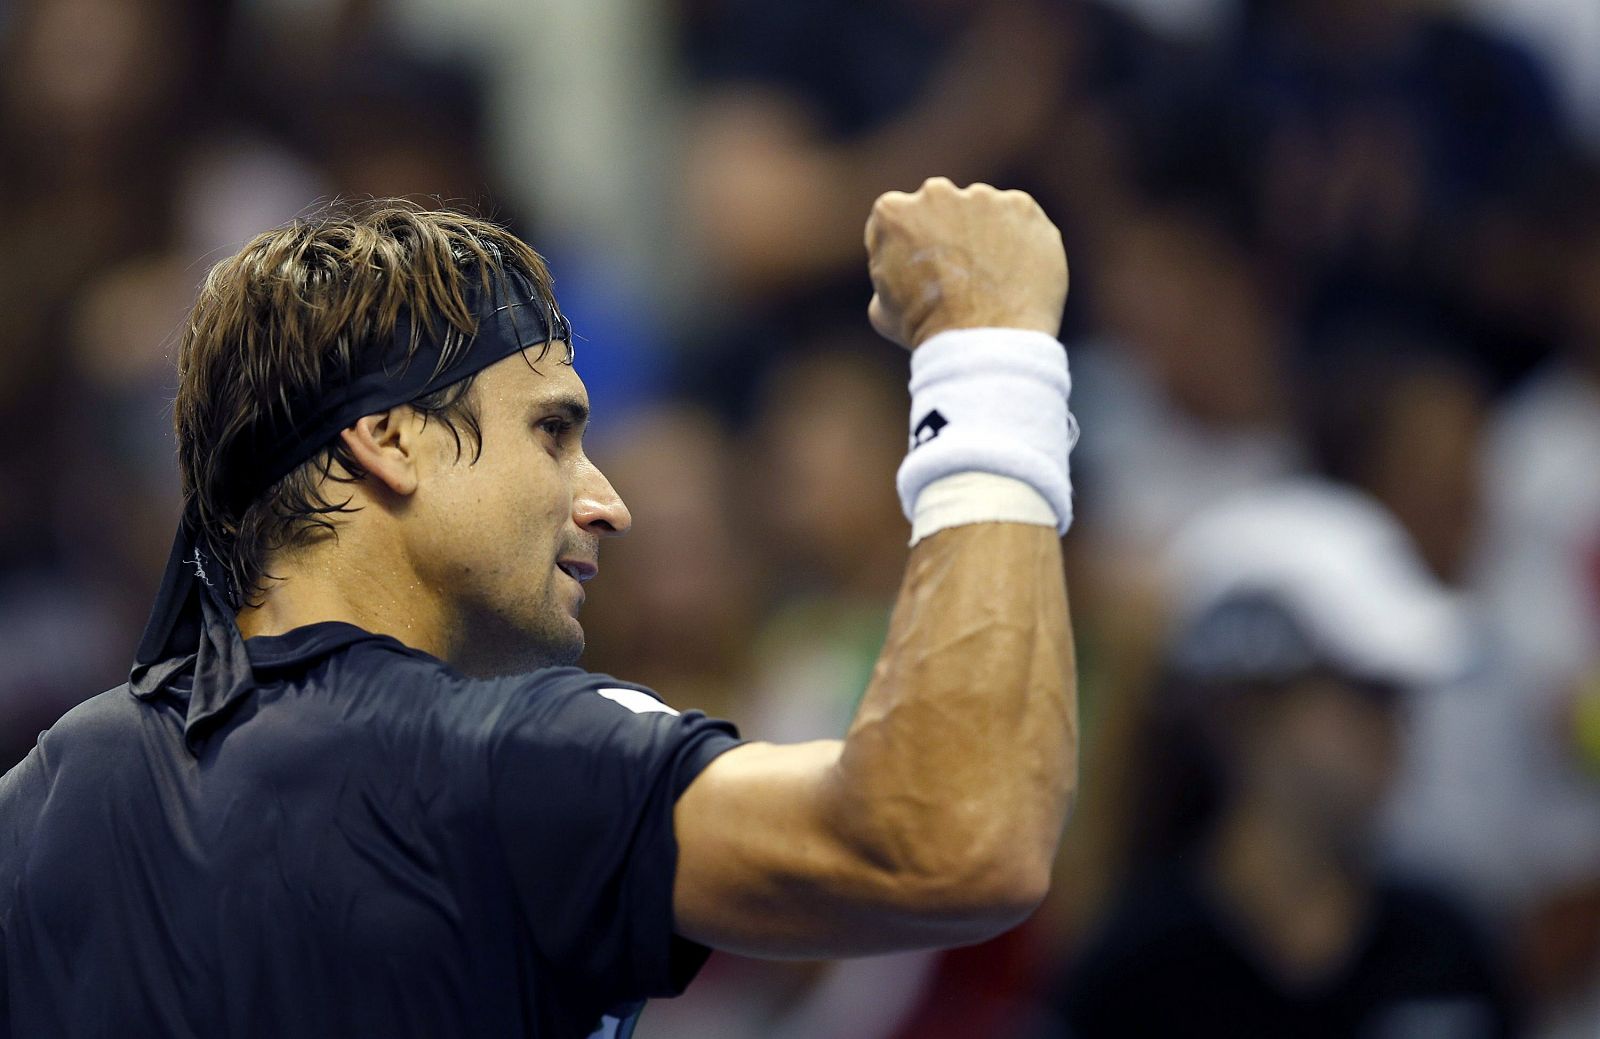 El tenista David Ferrer celebra su victoria